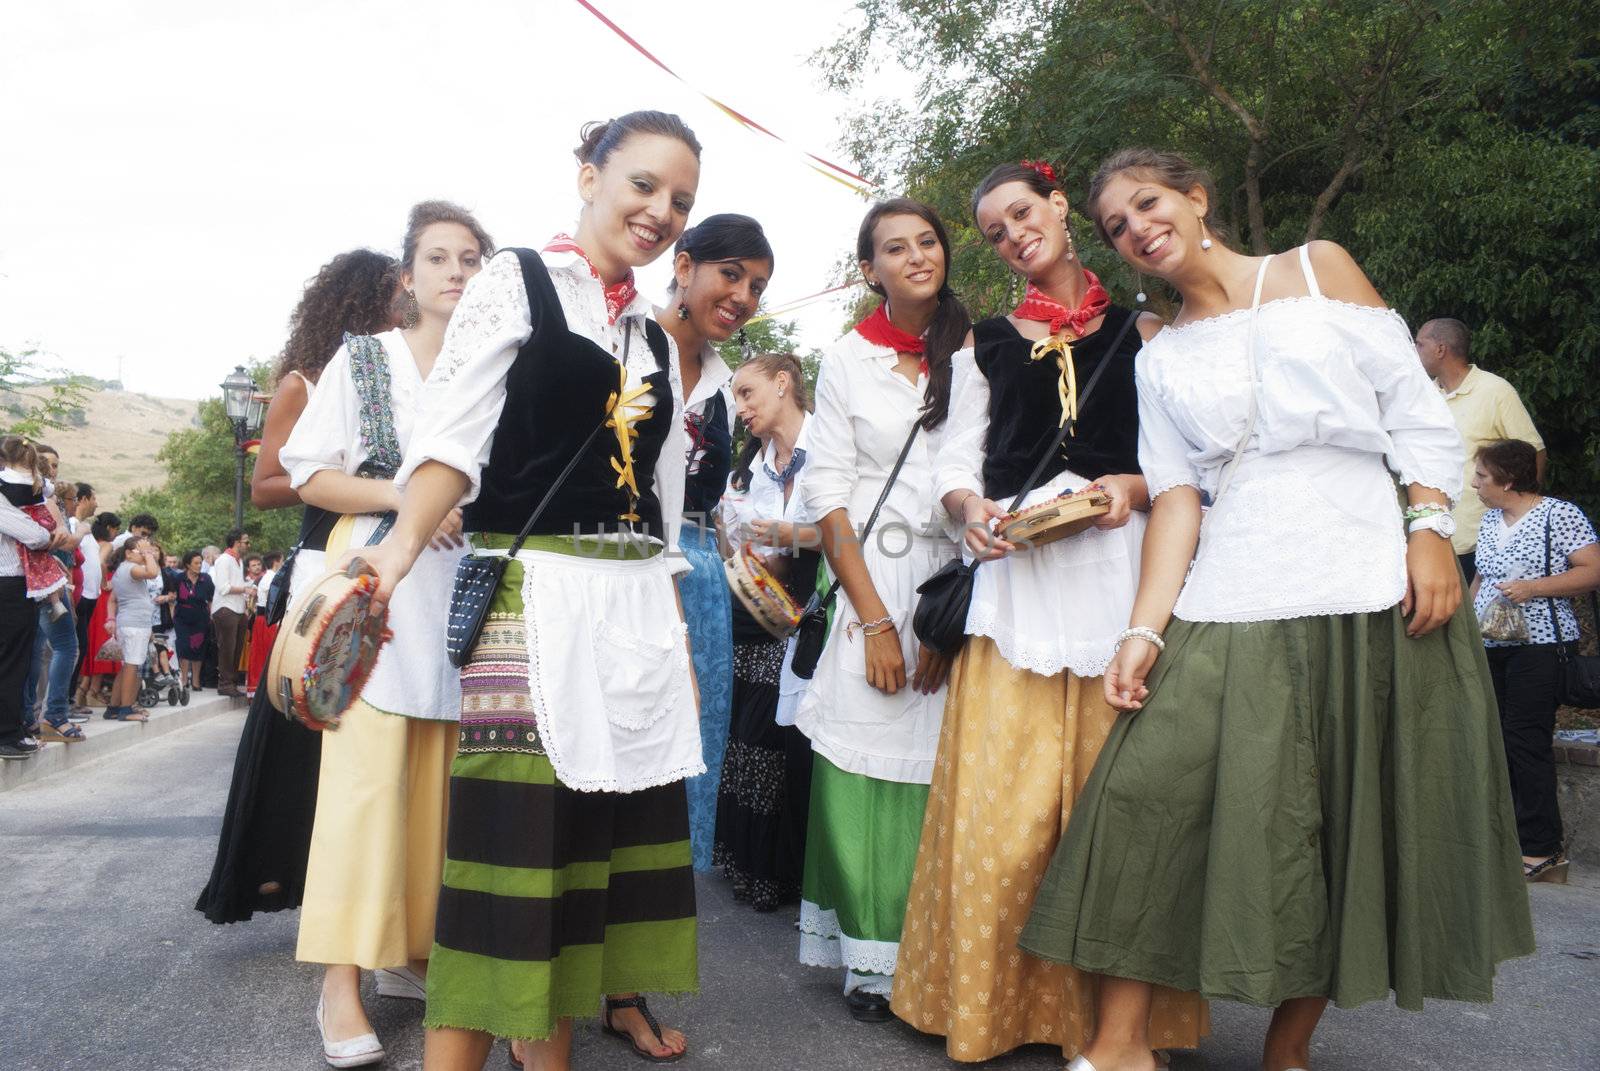 folk groups by gandolfocannatella